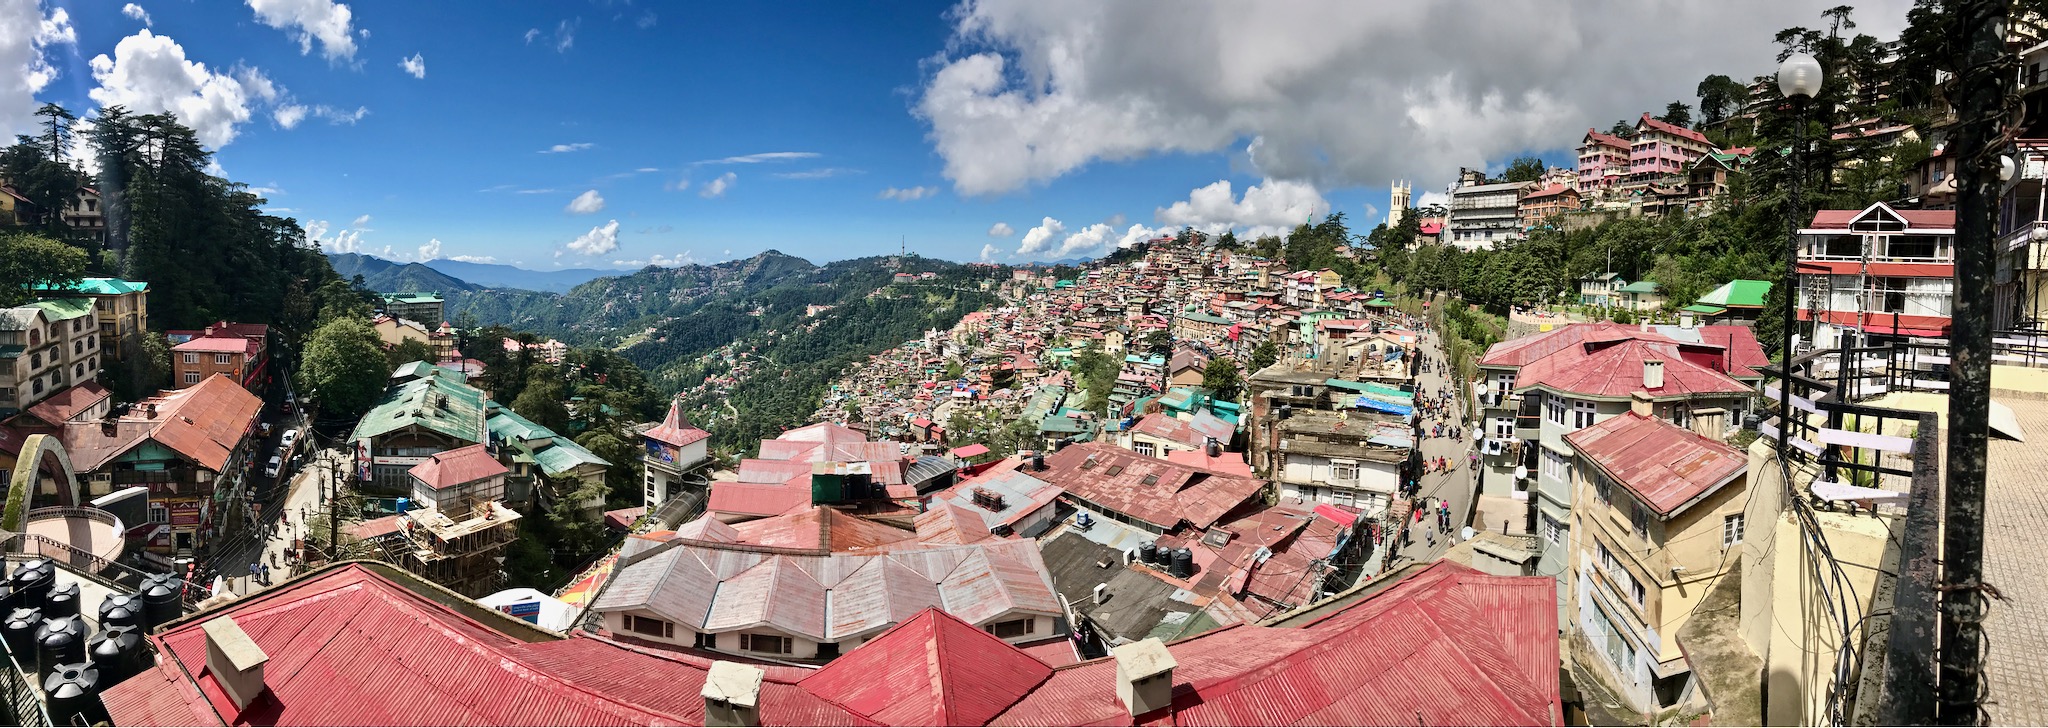 Shimla Panorama